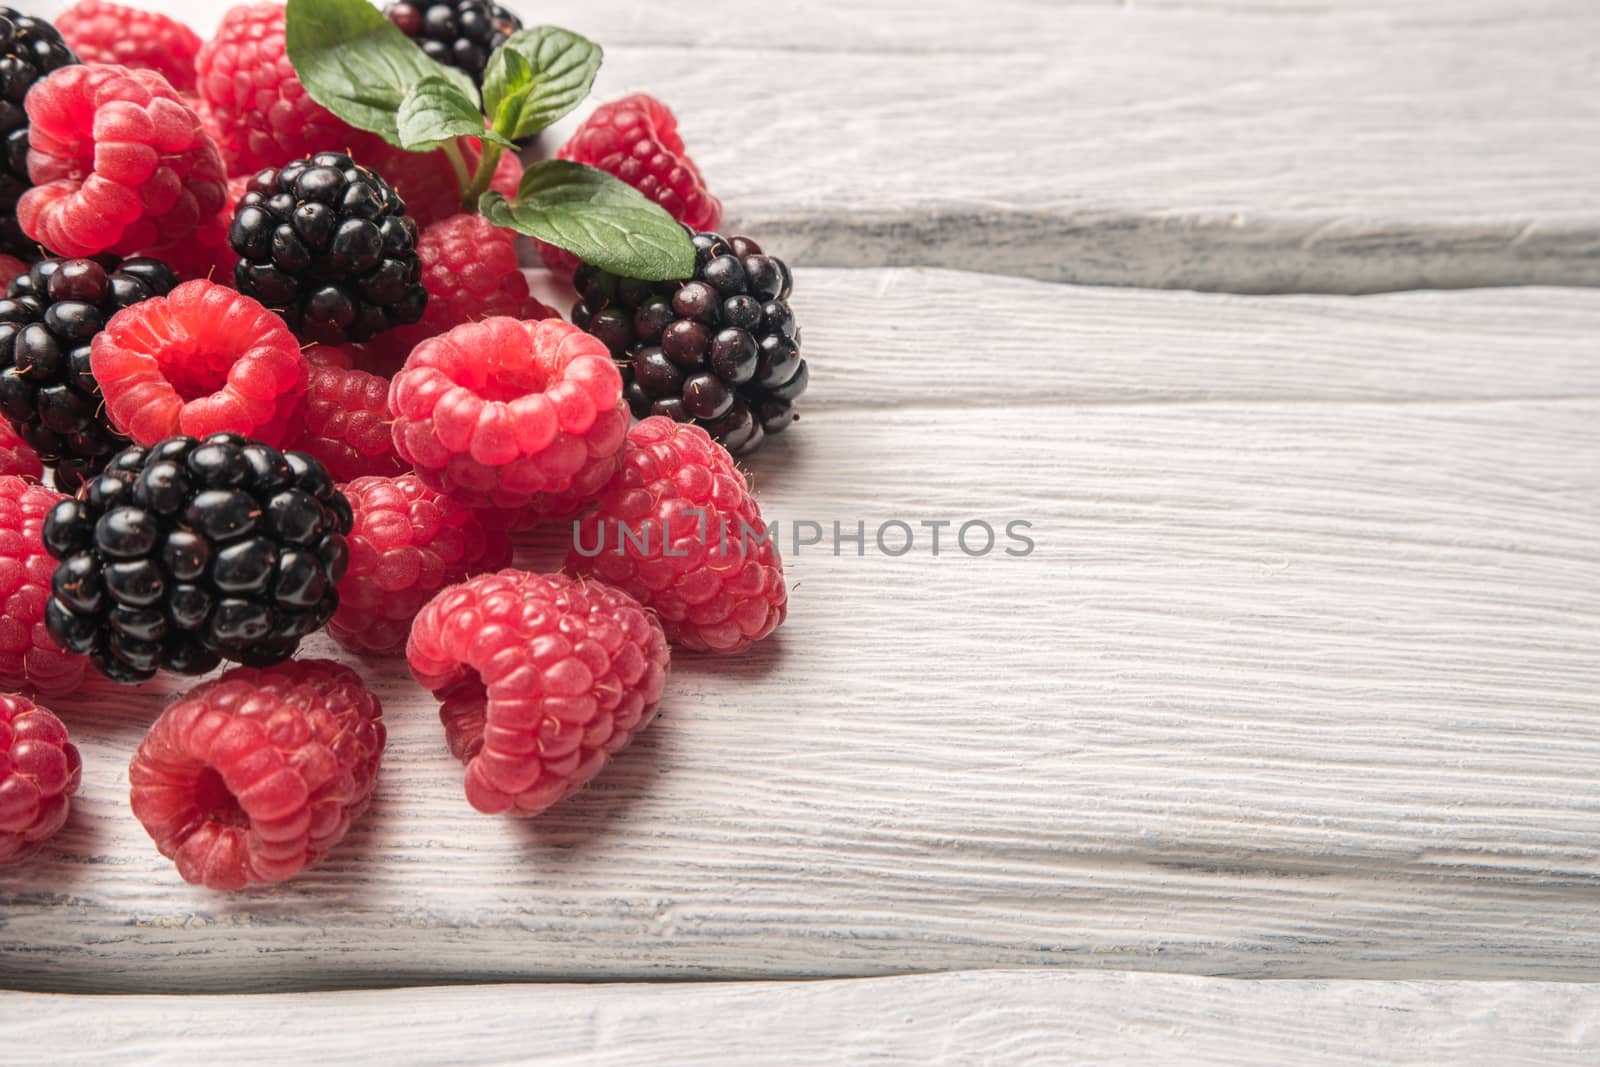 Fresh organic raspberries and blackberries by AnaMarques